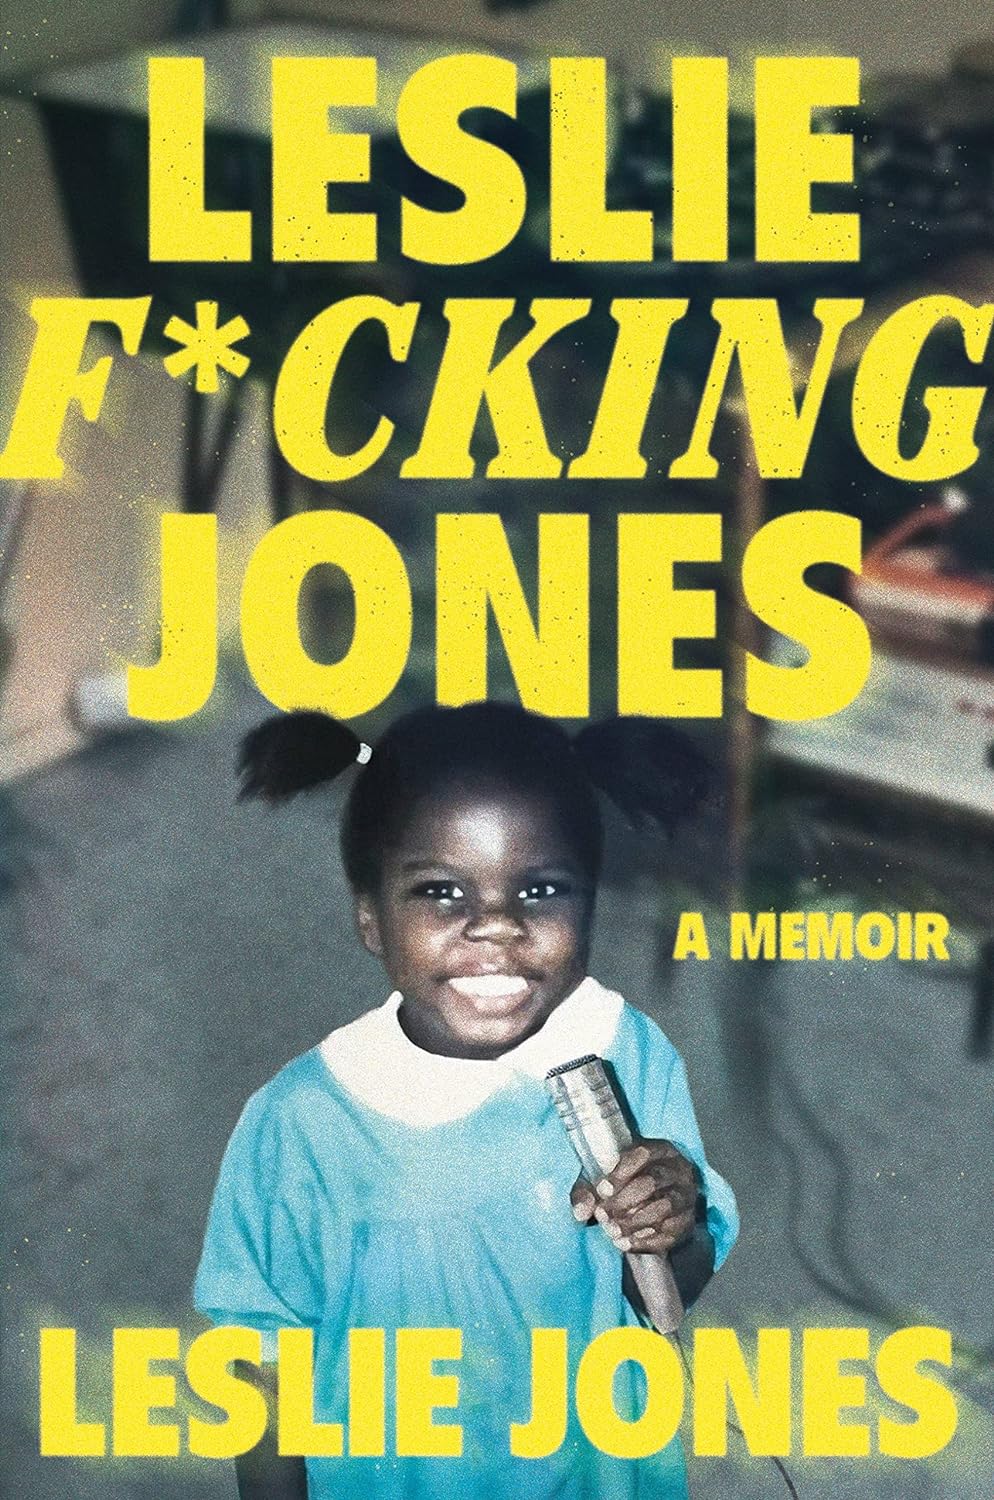 The new Leslie Jones memoir on Kindle: Great gifts under $15